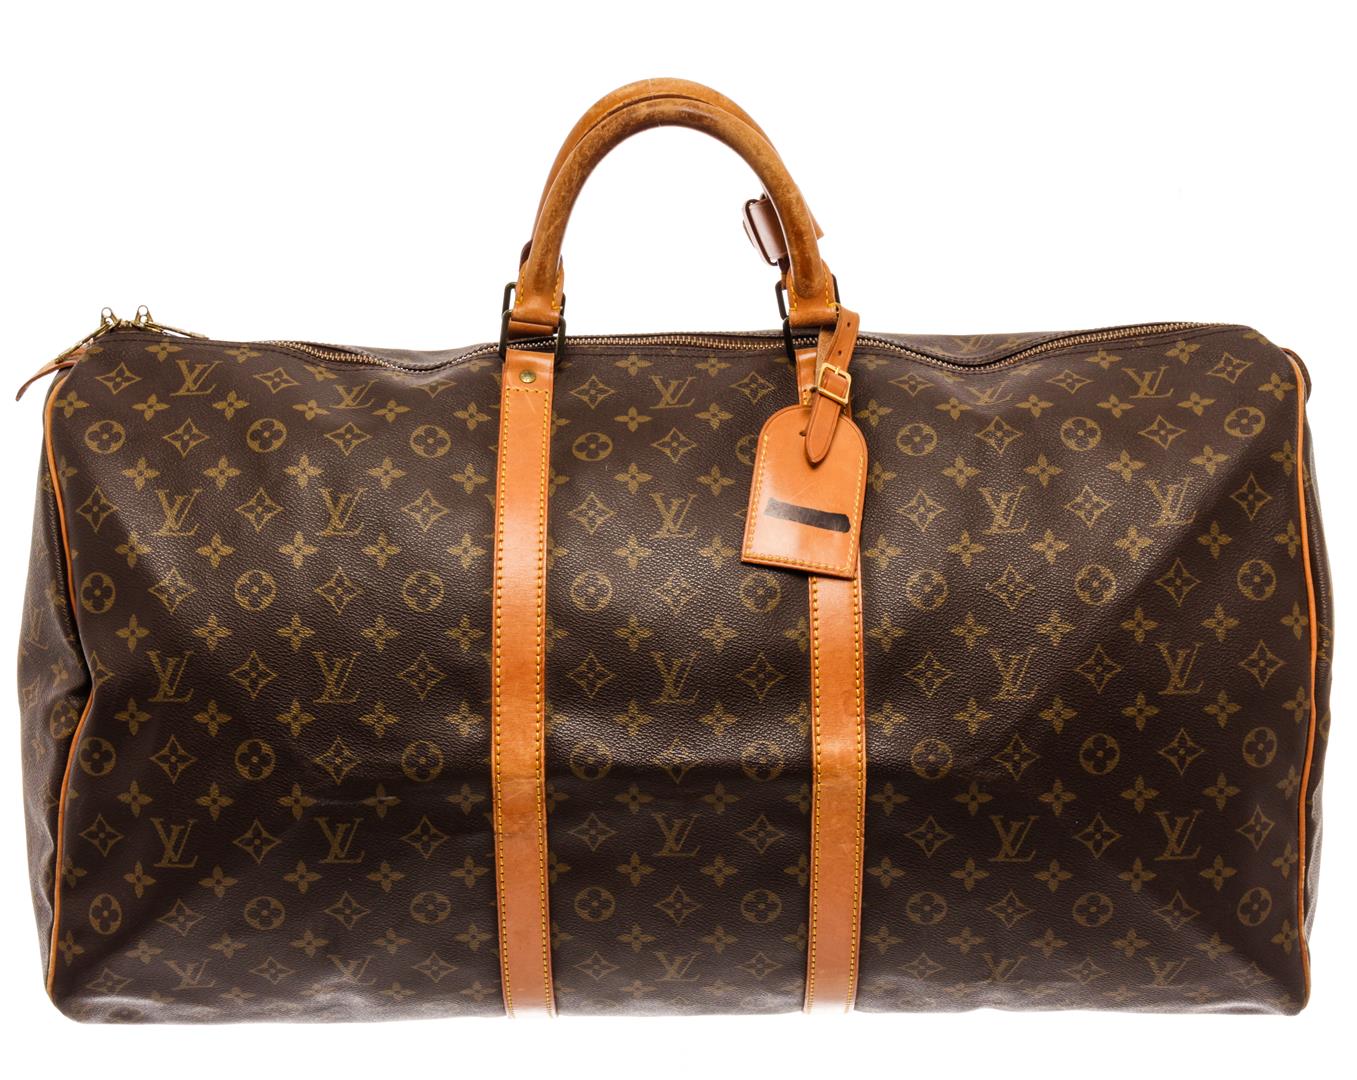 2 in 1 Louis Vuitton Bag (A15) - Anto deals